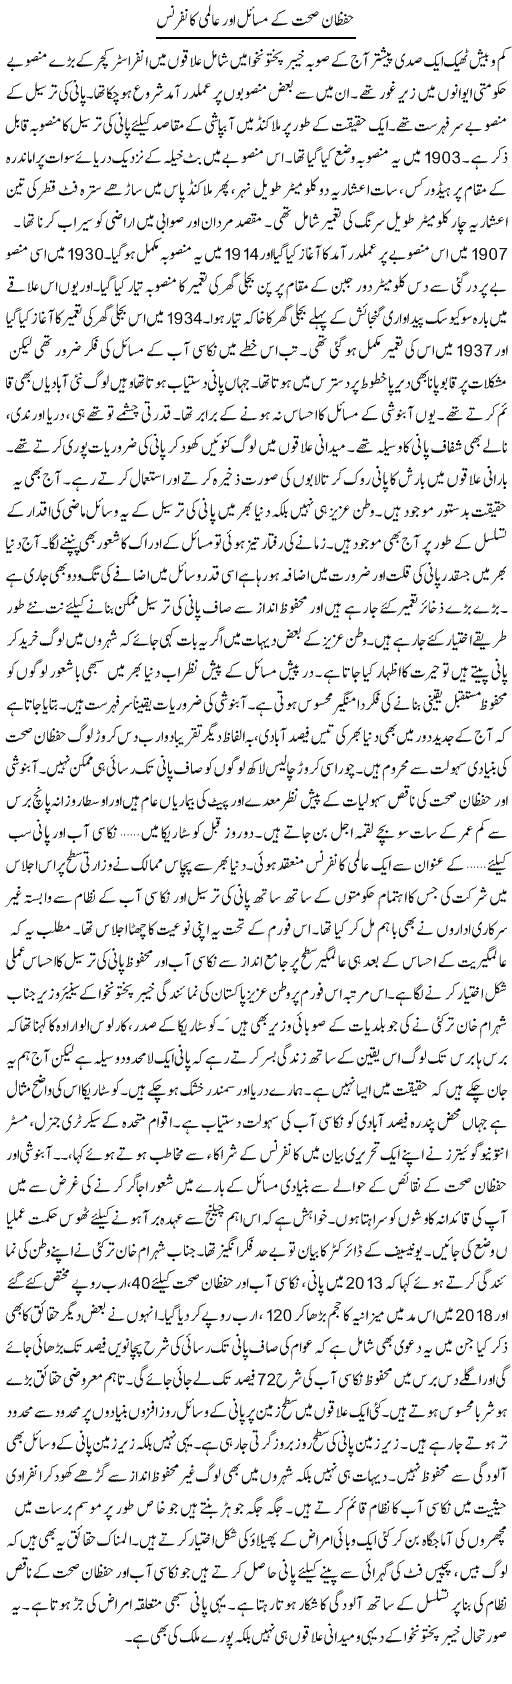 Hifzan Sehat Ke Masail Aur Aalmi Conference | Muhammad Haroon | Daily Urdu Columns